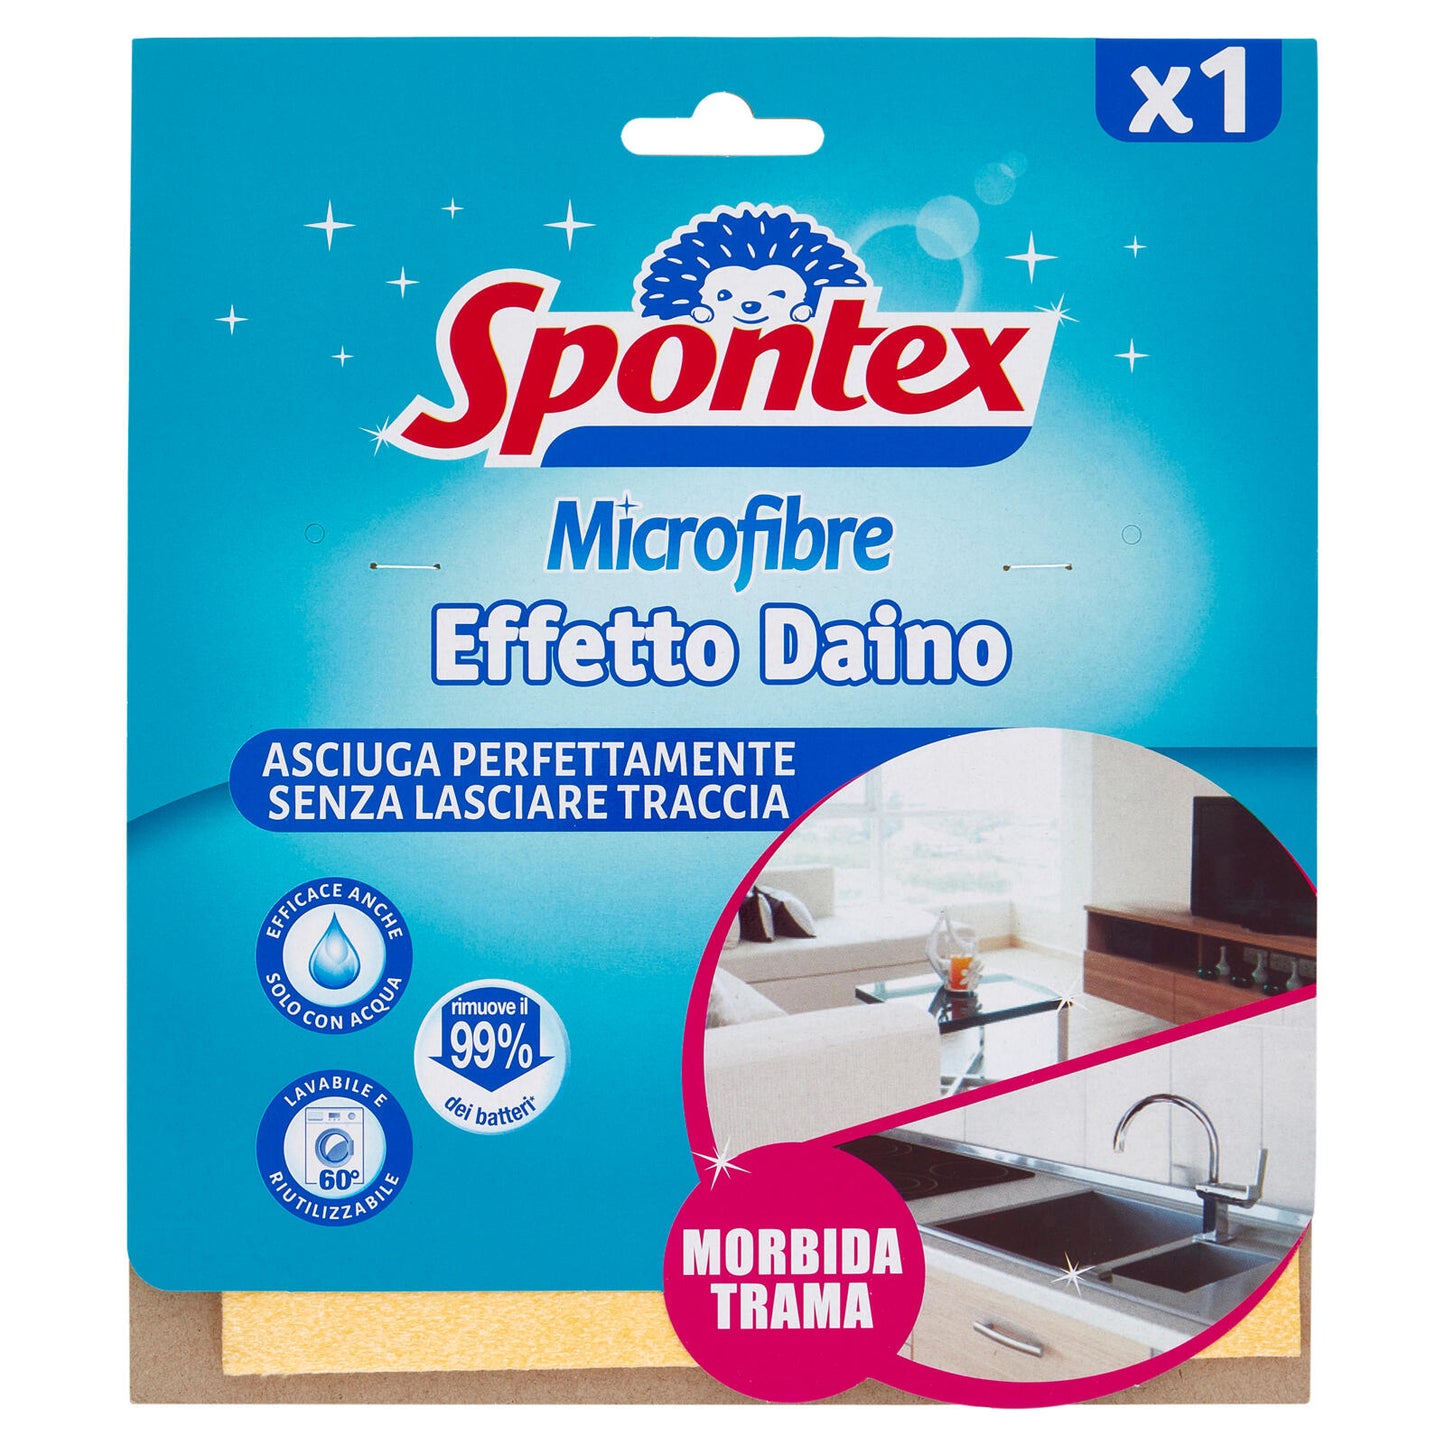 Spontex Microfibre Effetto Daino x1